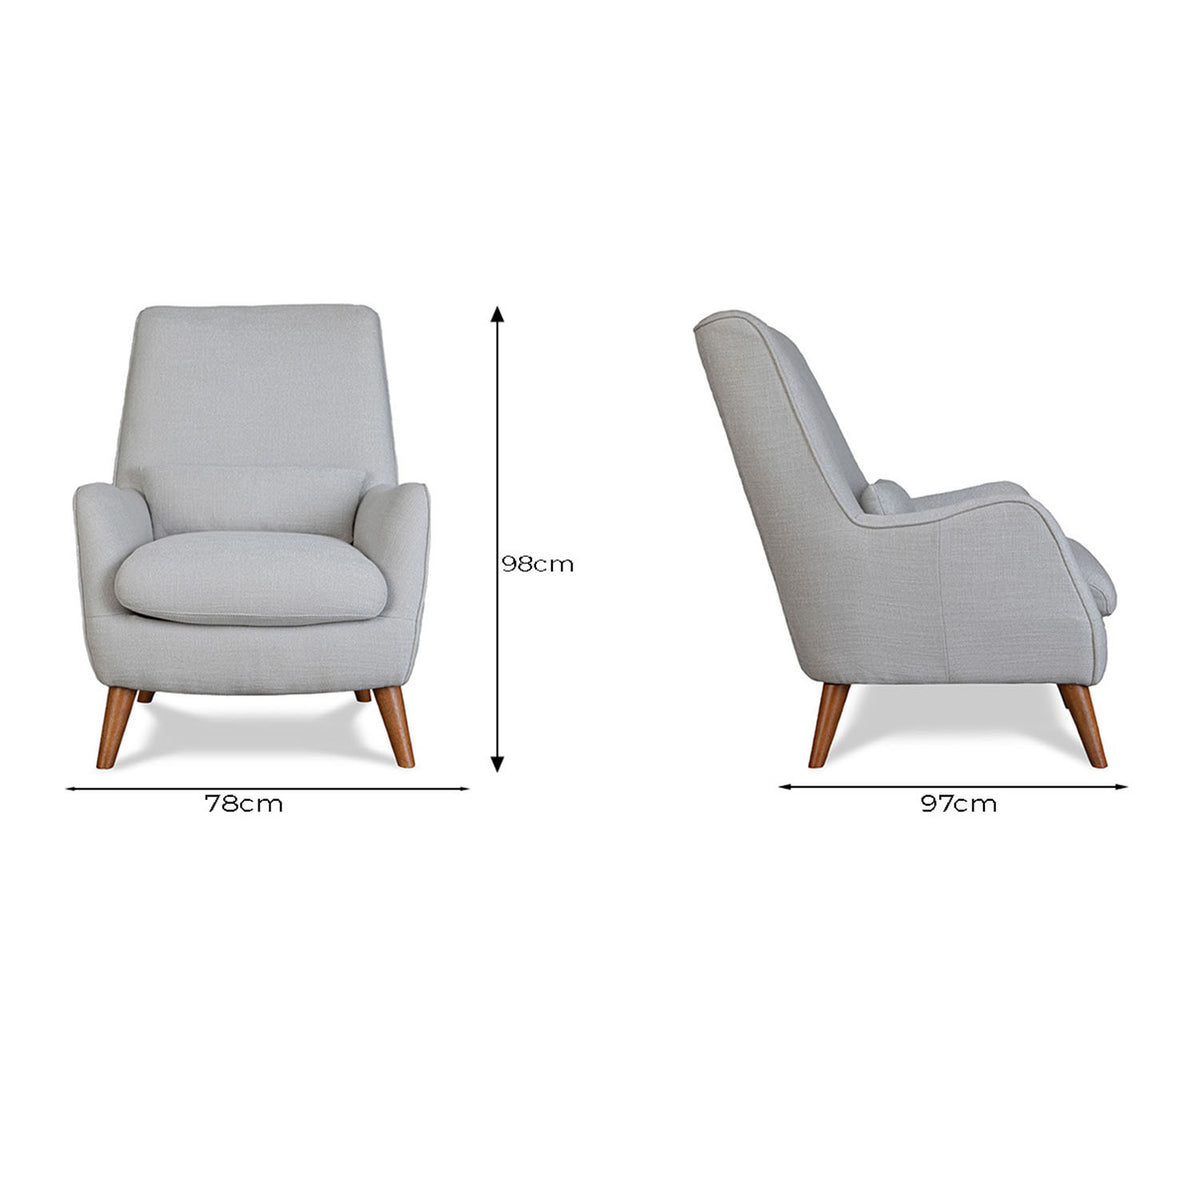 Lunar Fabric Chair - Chair from Secret Sofa - Just $899.00! Shop now at Secret Sofa